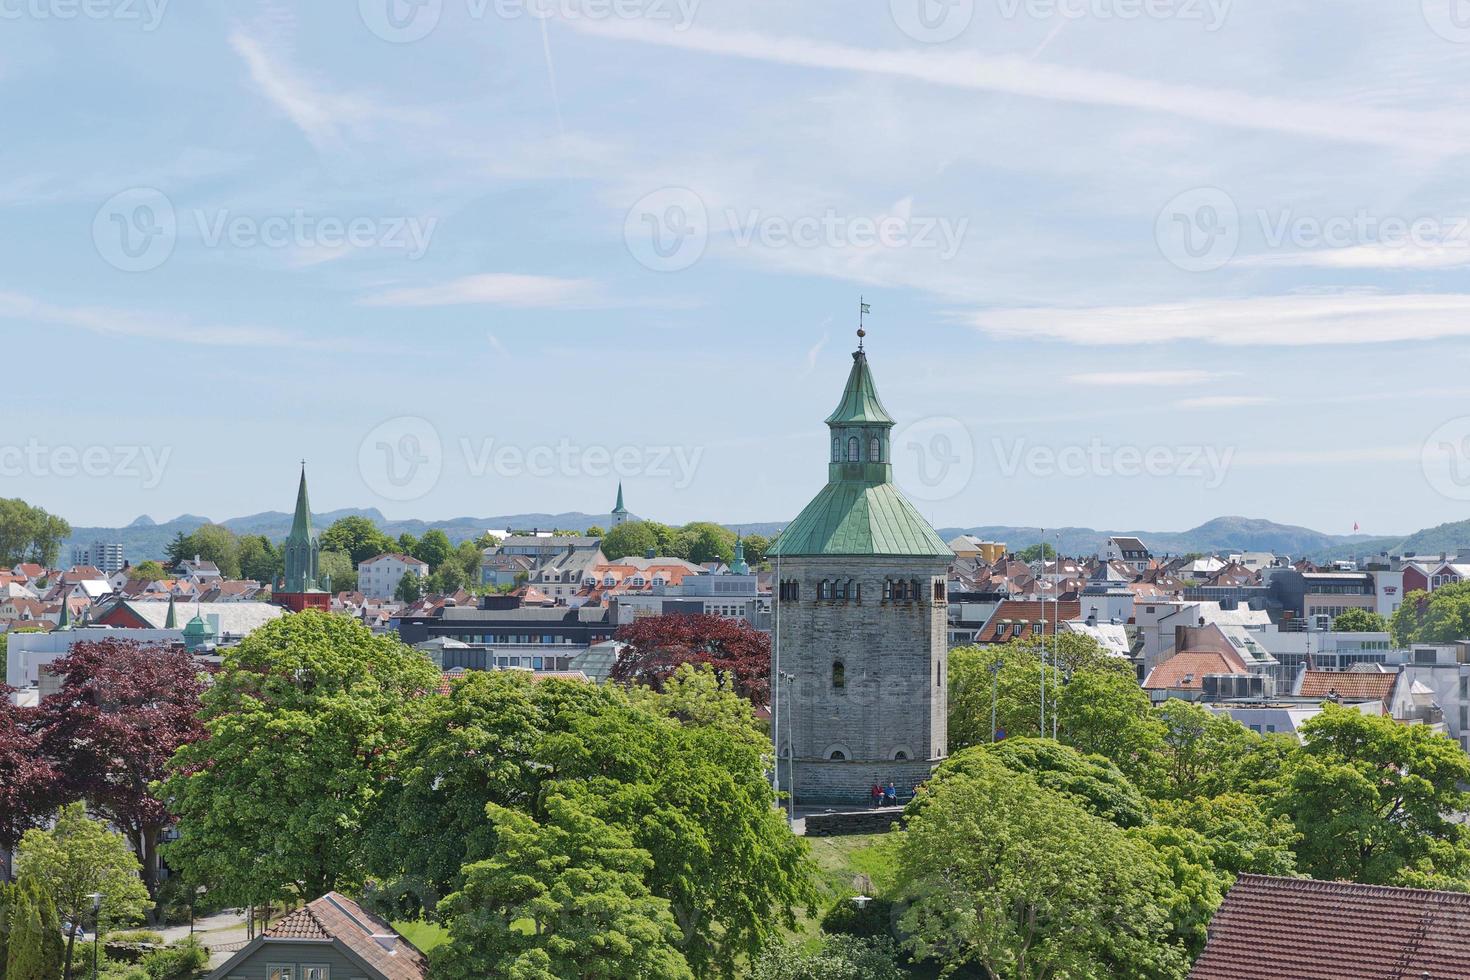 The Valberg tower overlooking town of Stavanger in Norway photo